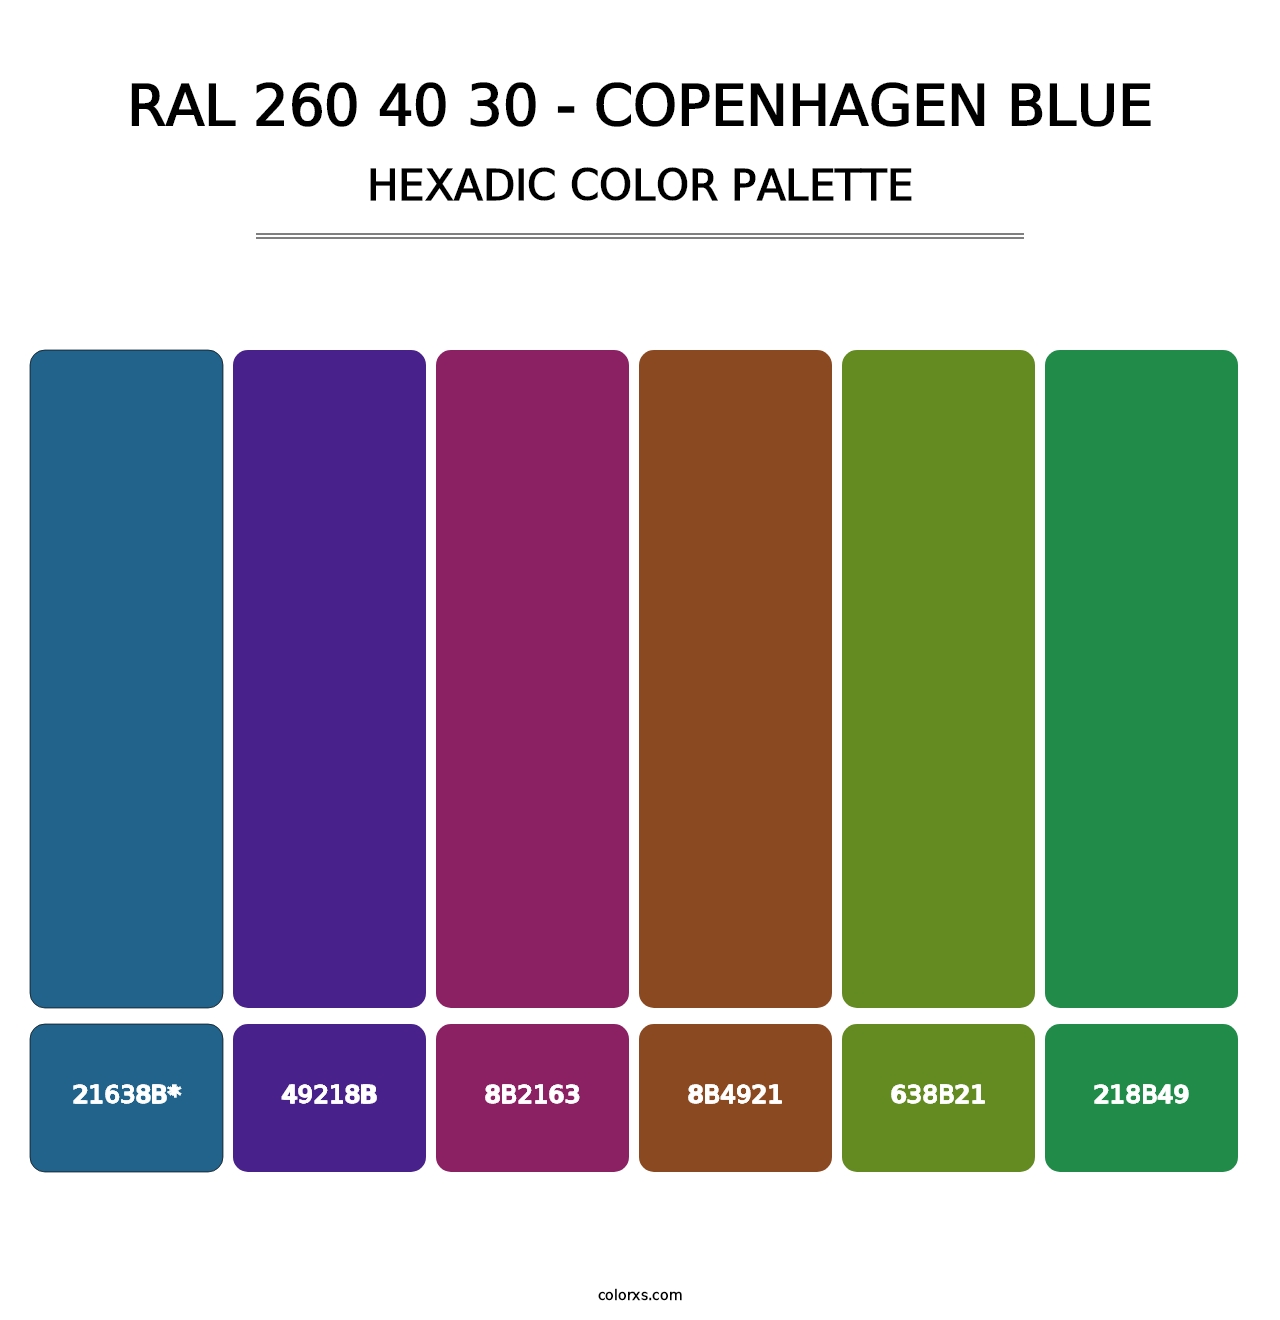 RAL 260 40 30 - Copenhagen Blue - Hexadic Color Palette